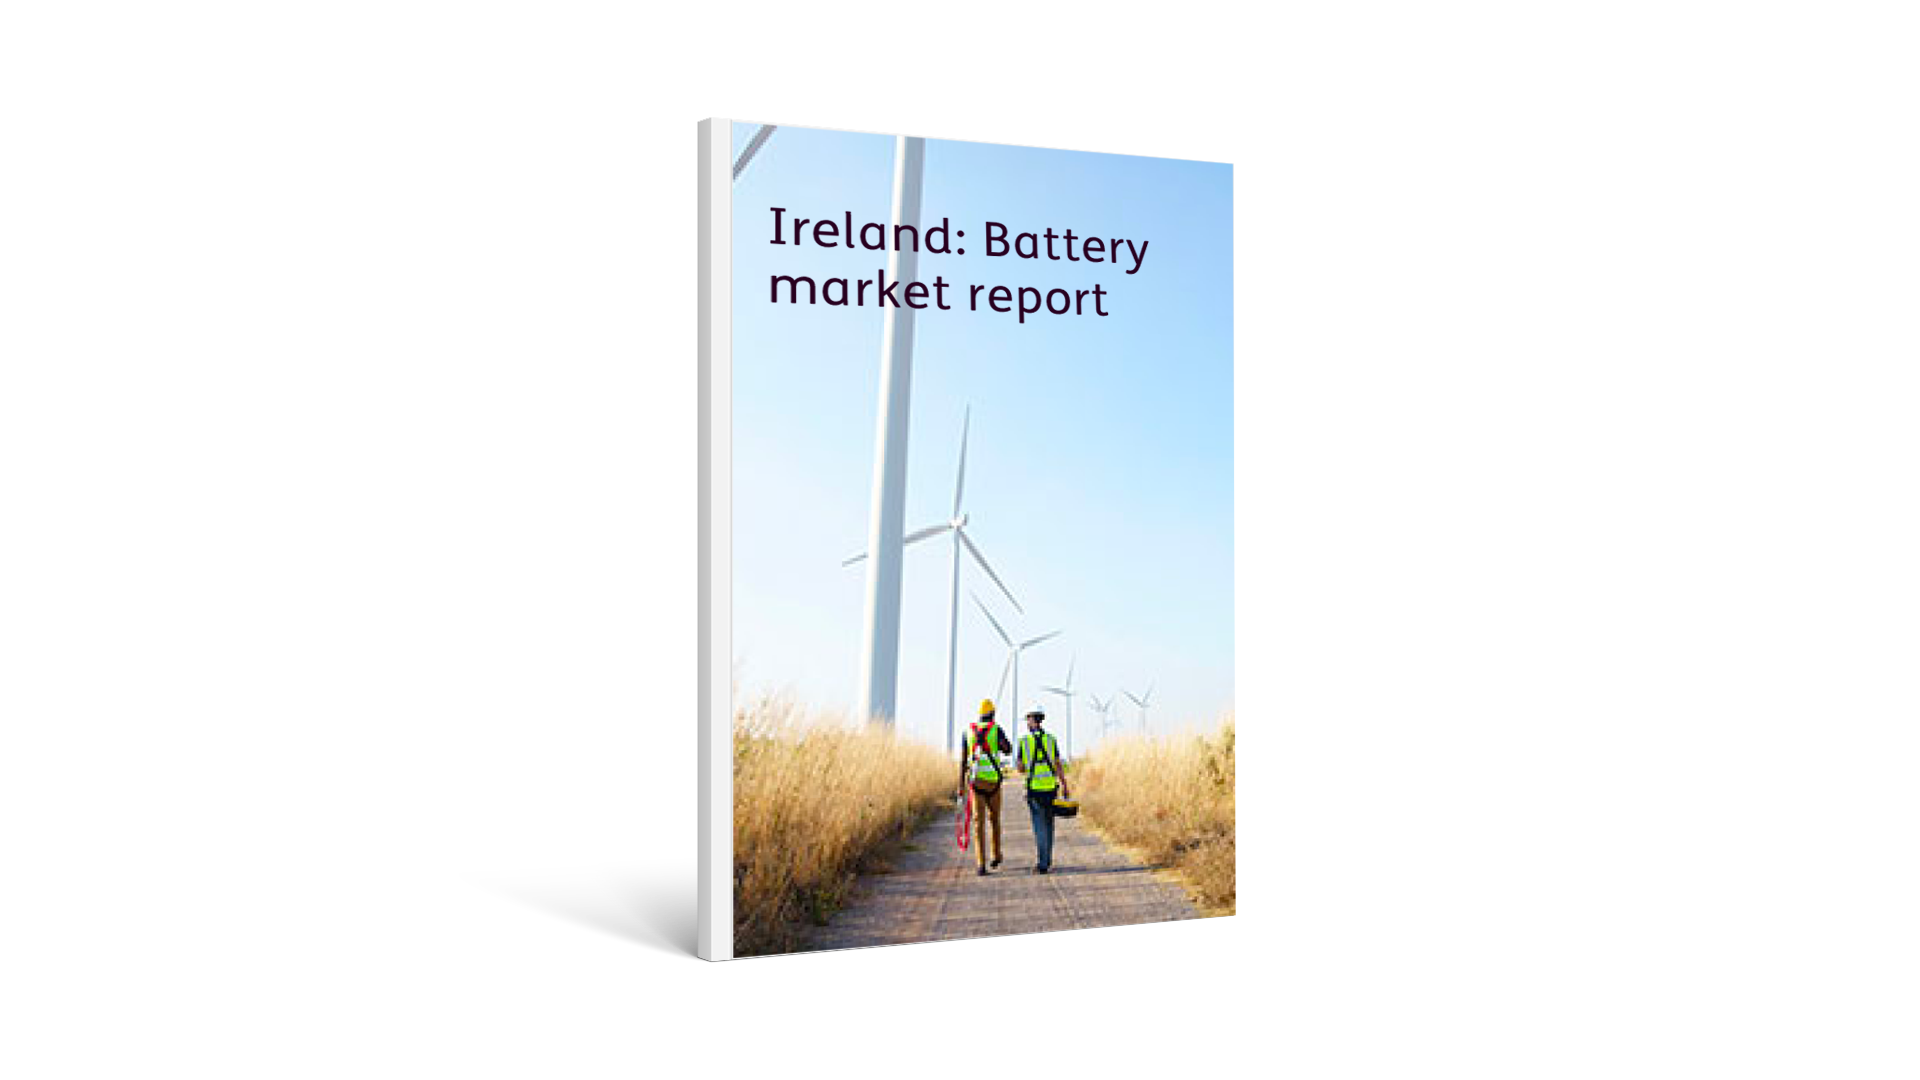 Ireland: Battery market report